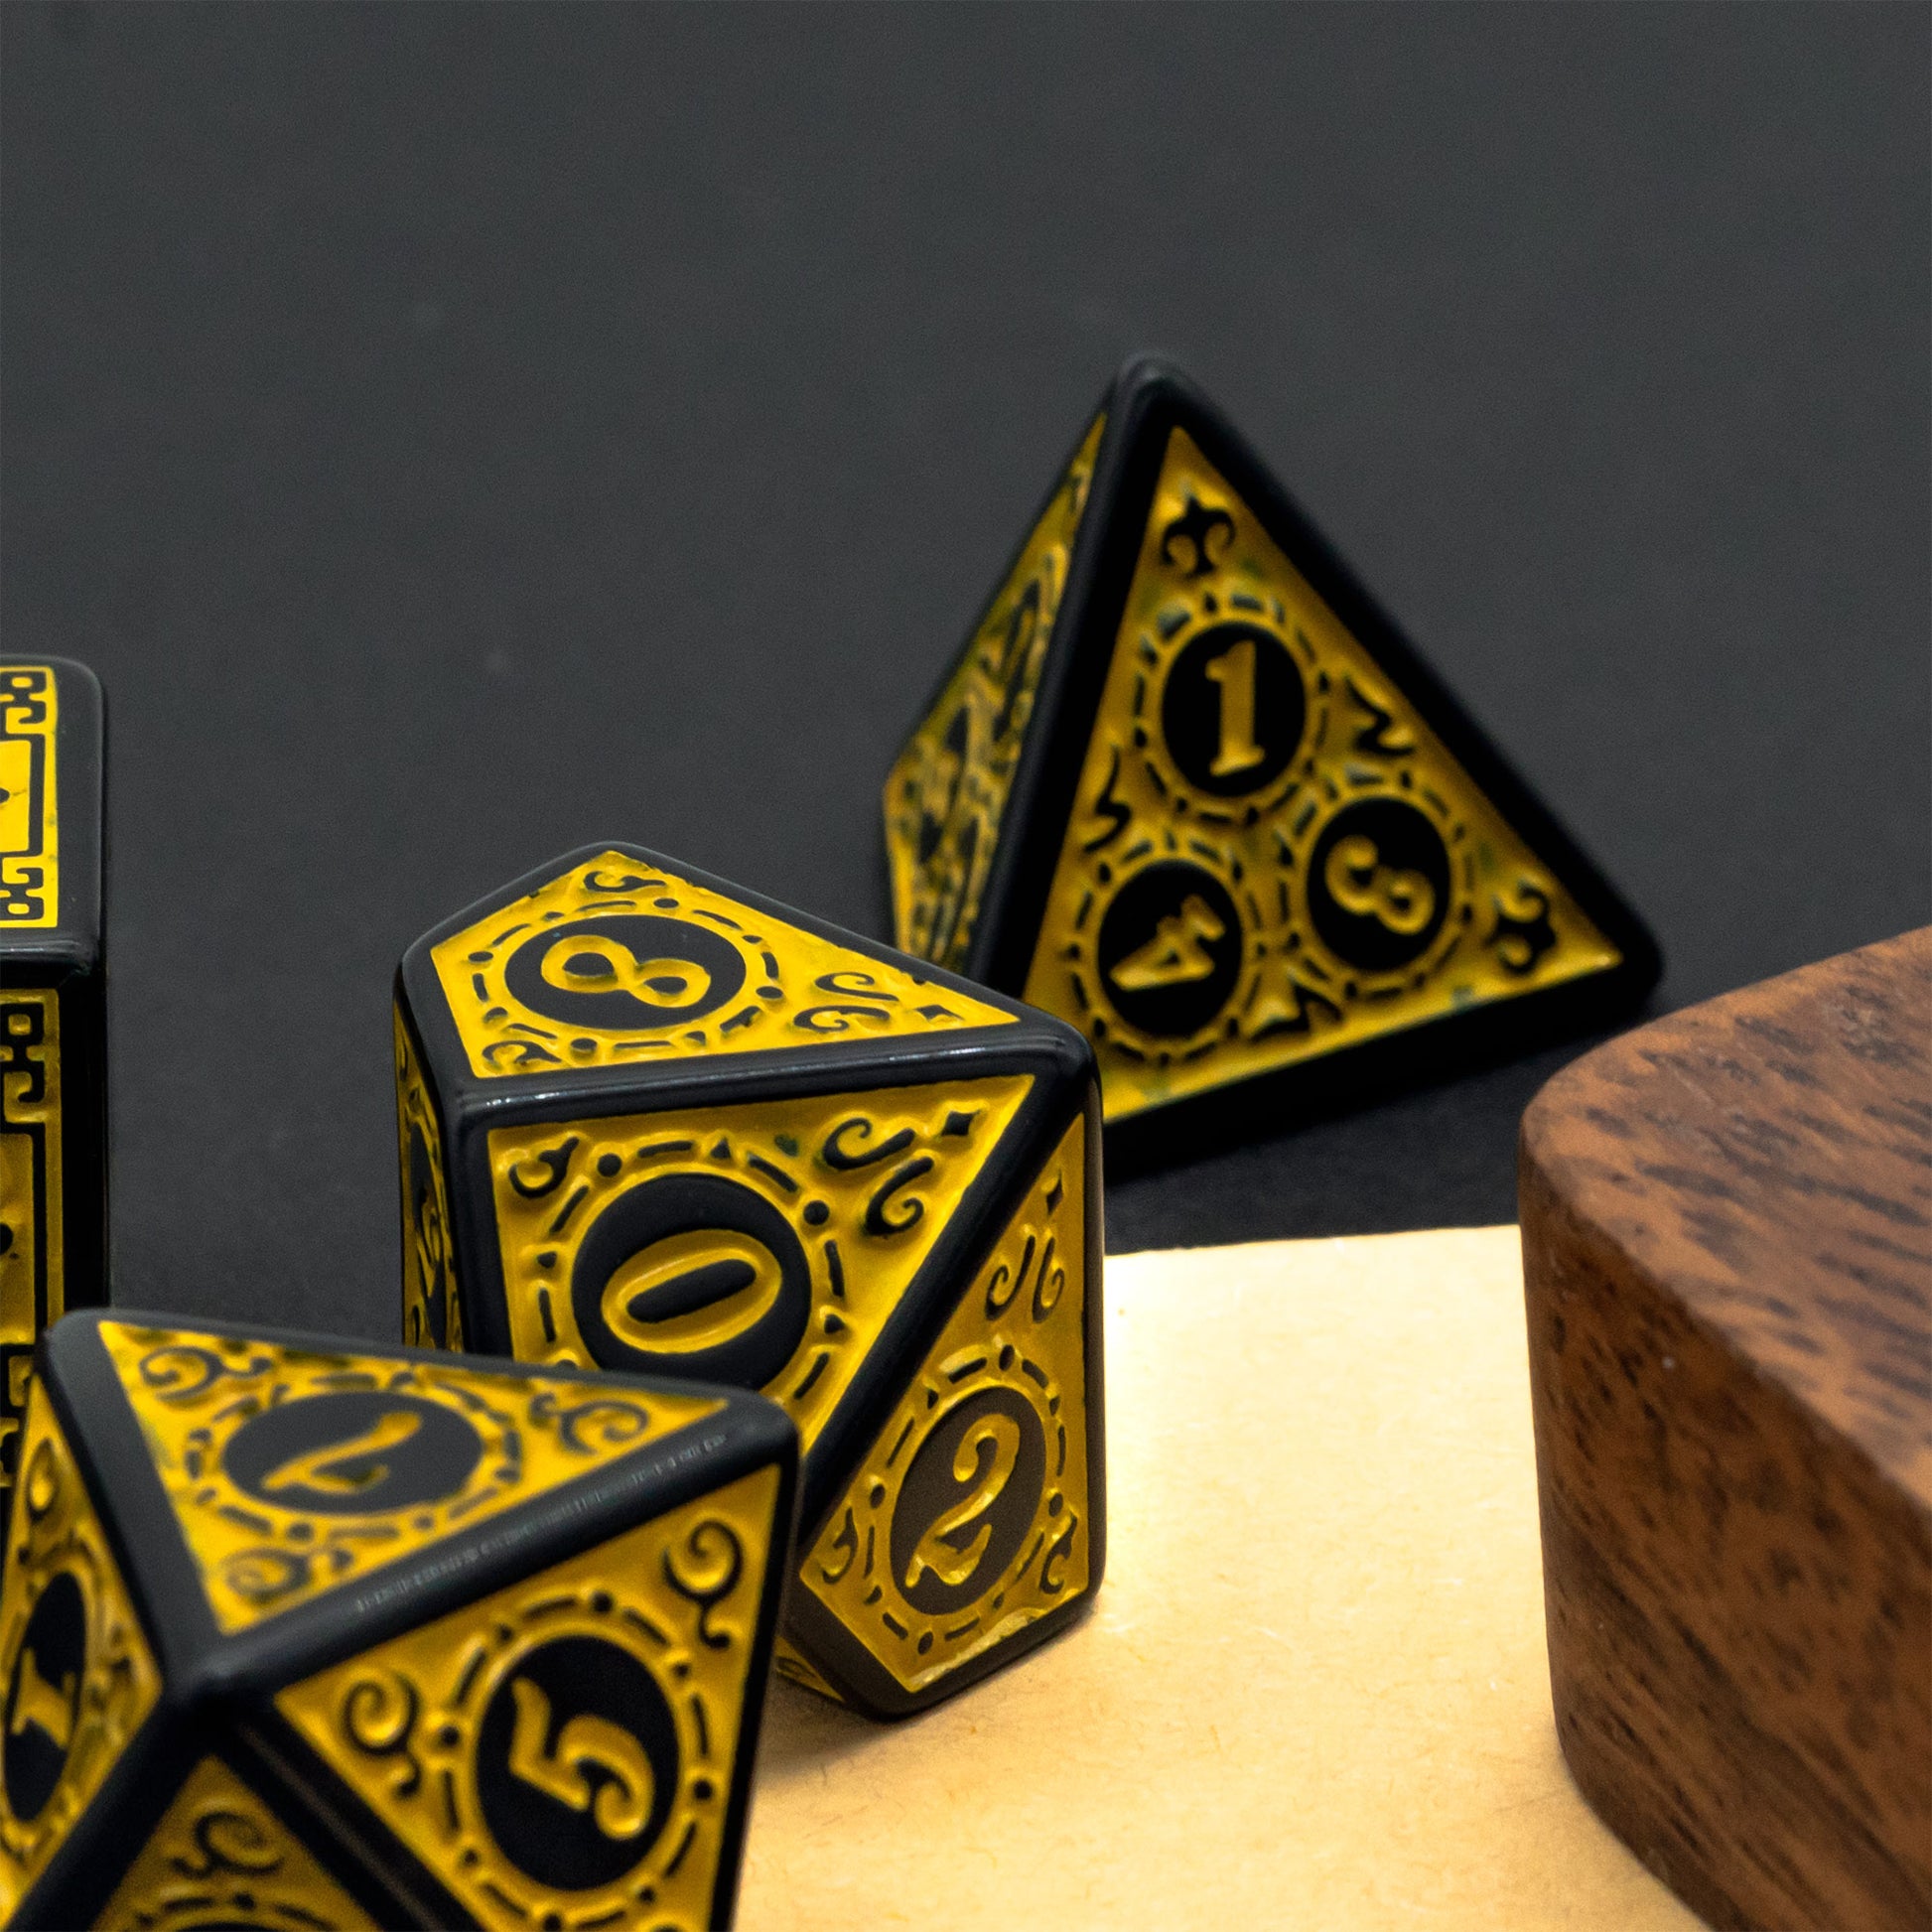 Yellow runic wonder acryllic dice set